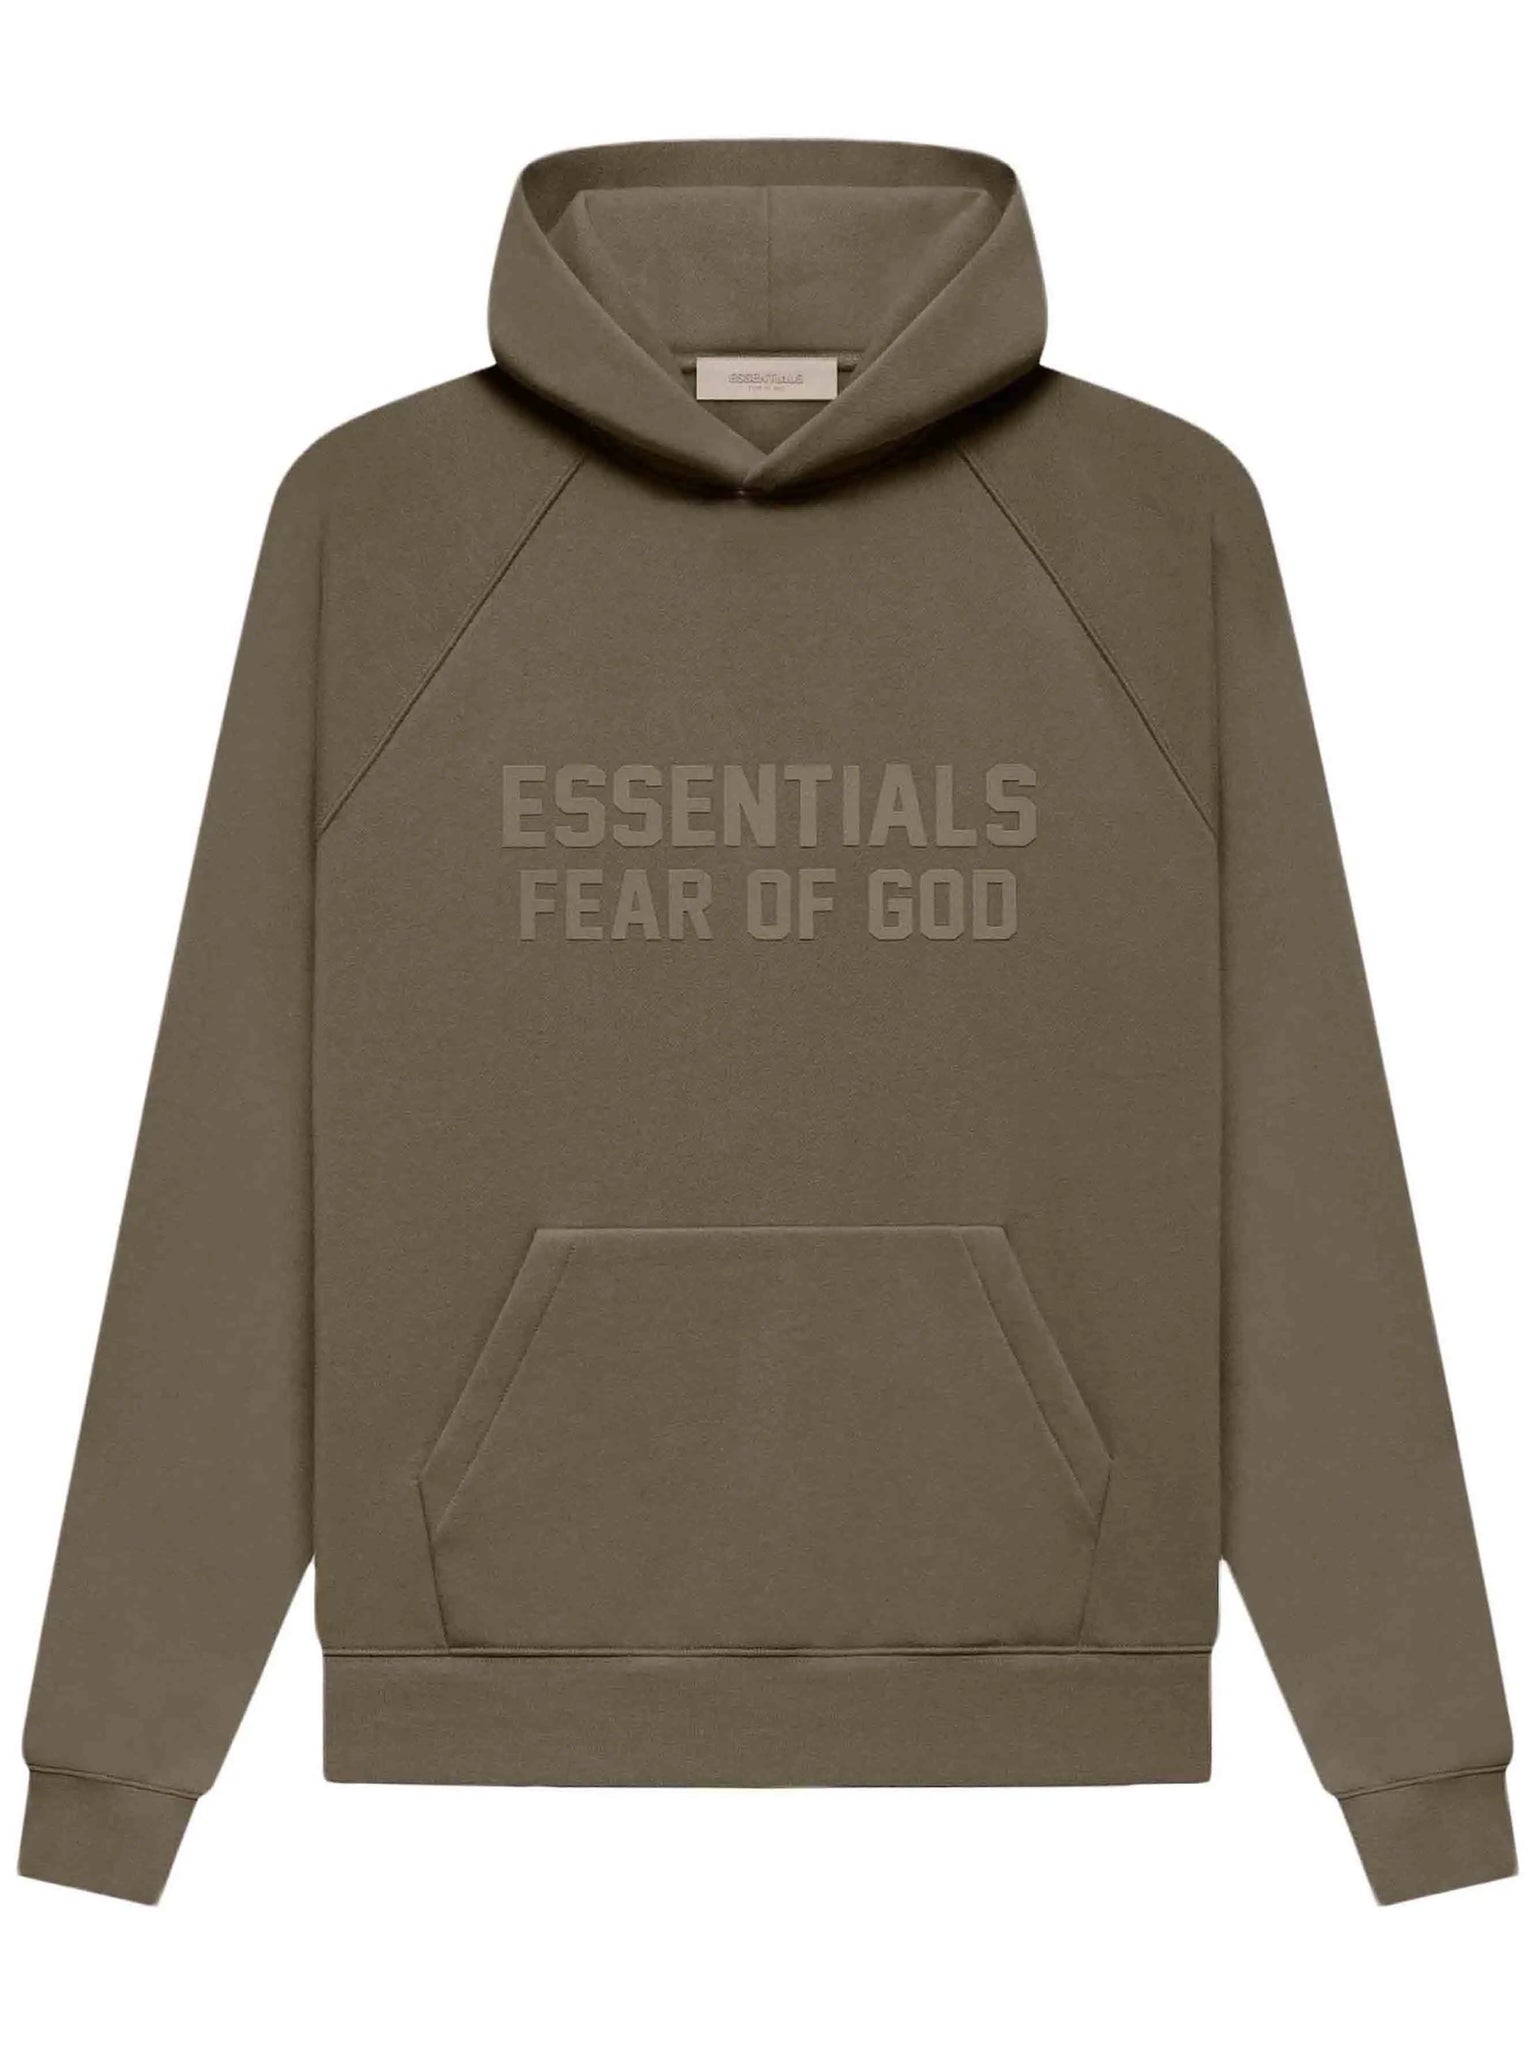 Fear of God Essentials Hoodie Wood Prior